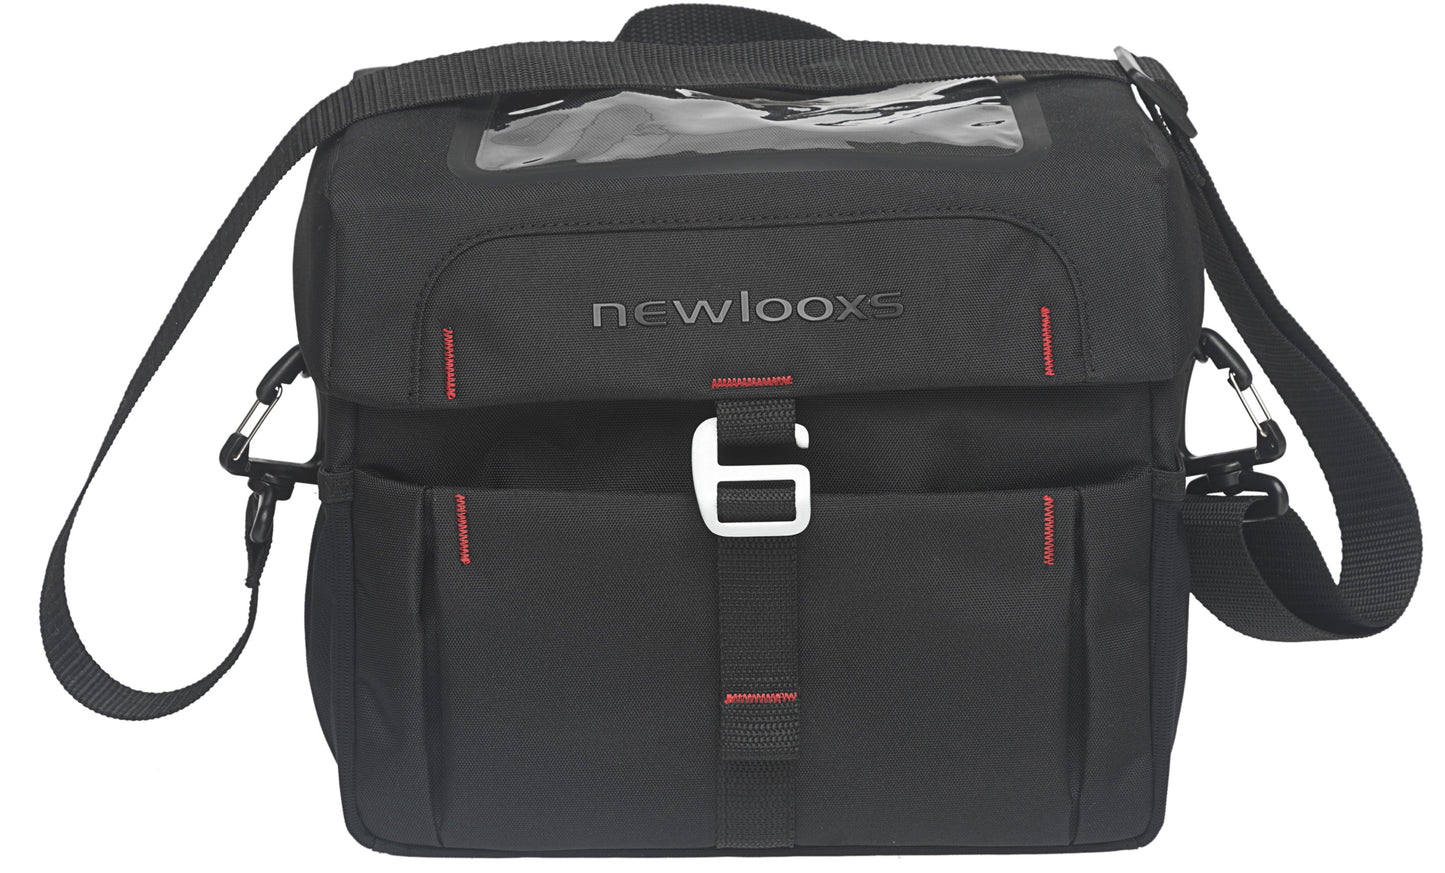 Vigo Handlebar Bag - sportieve stuurtas, waterdicht, verstevigd, reflecterend, zwart